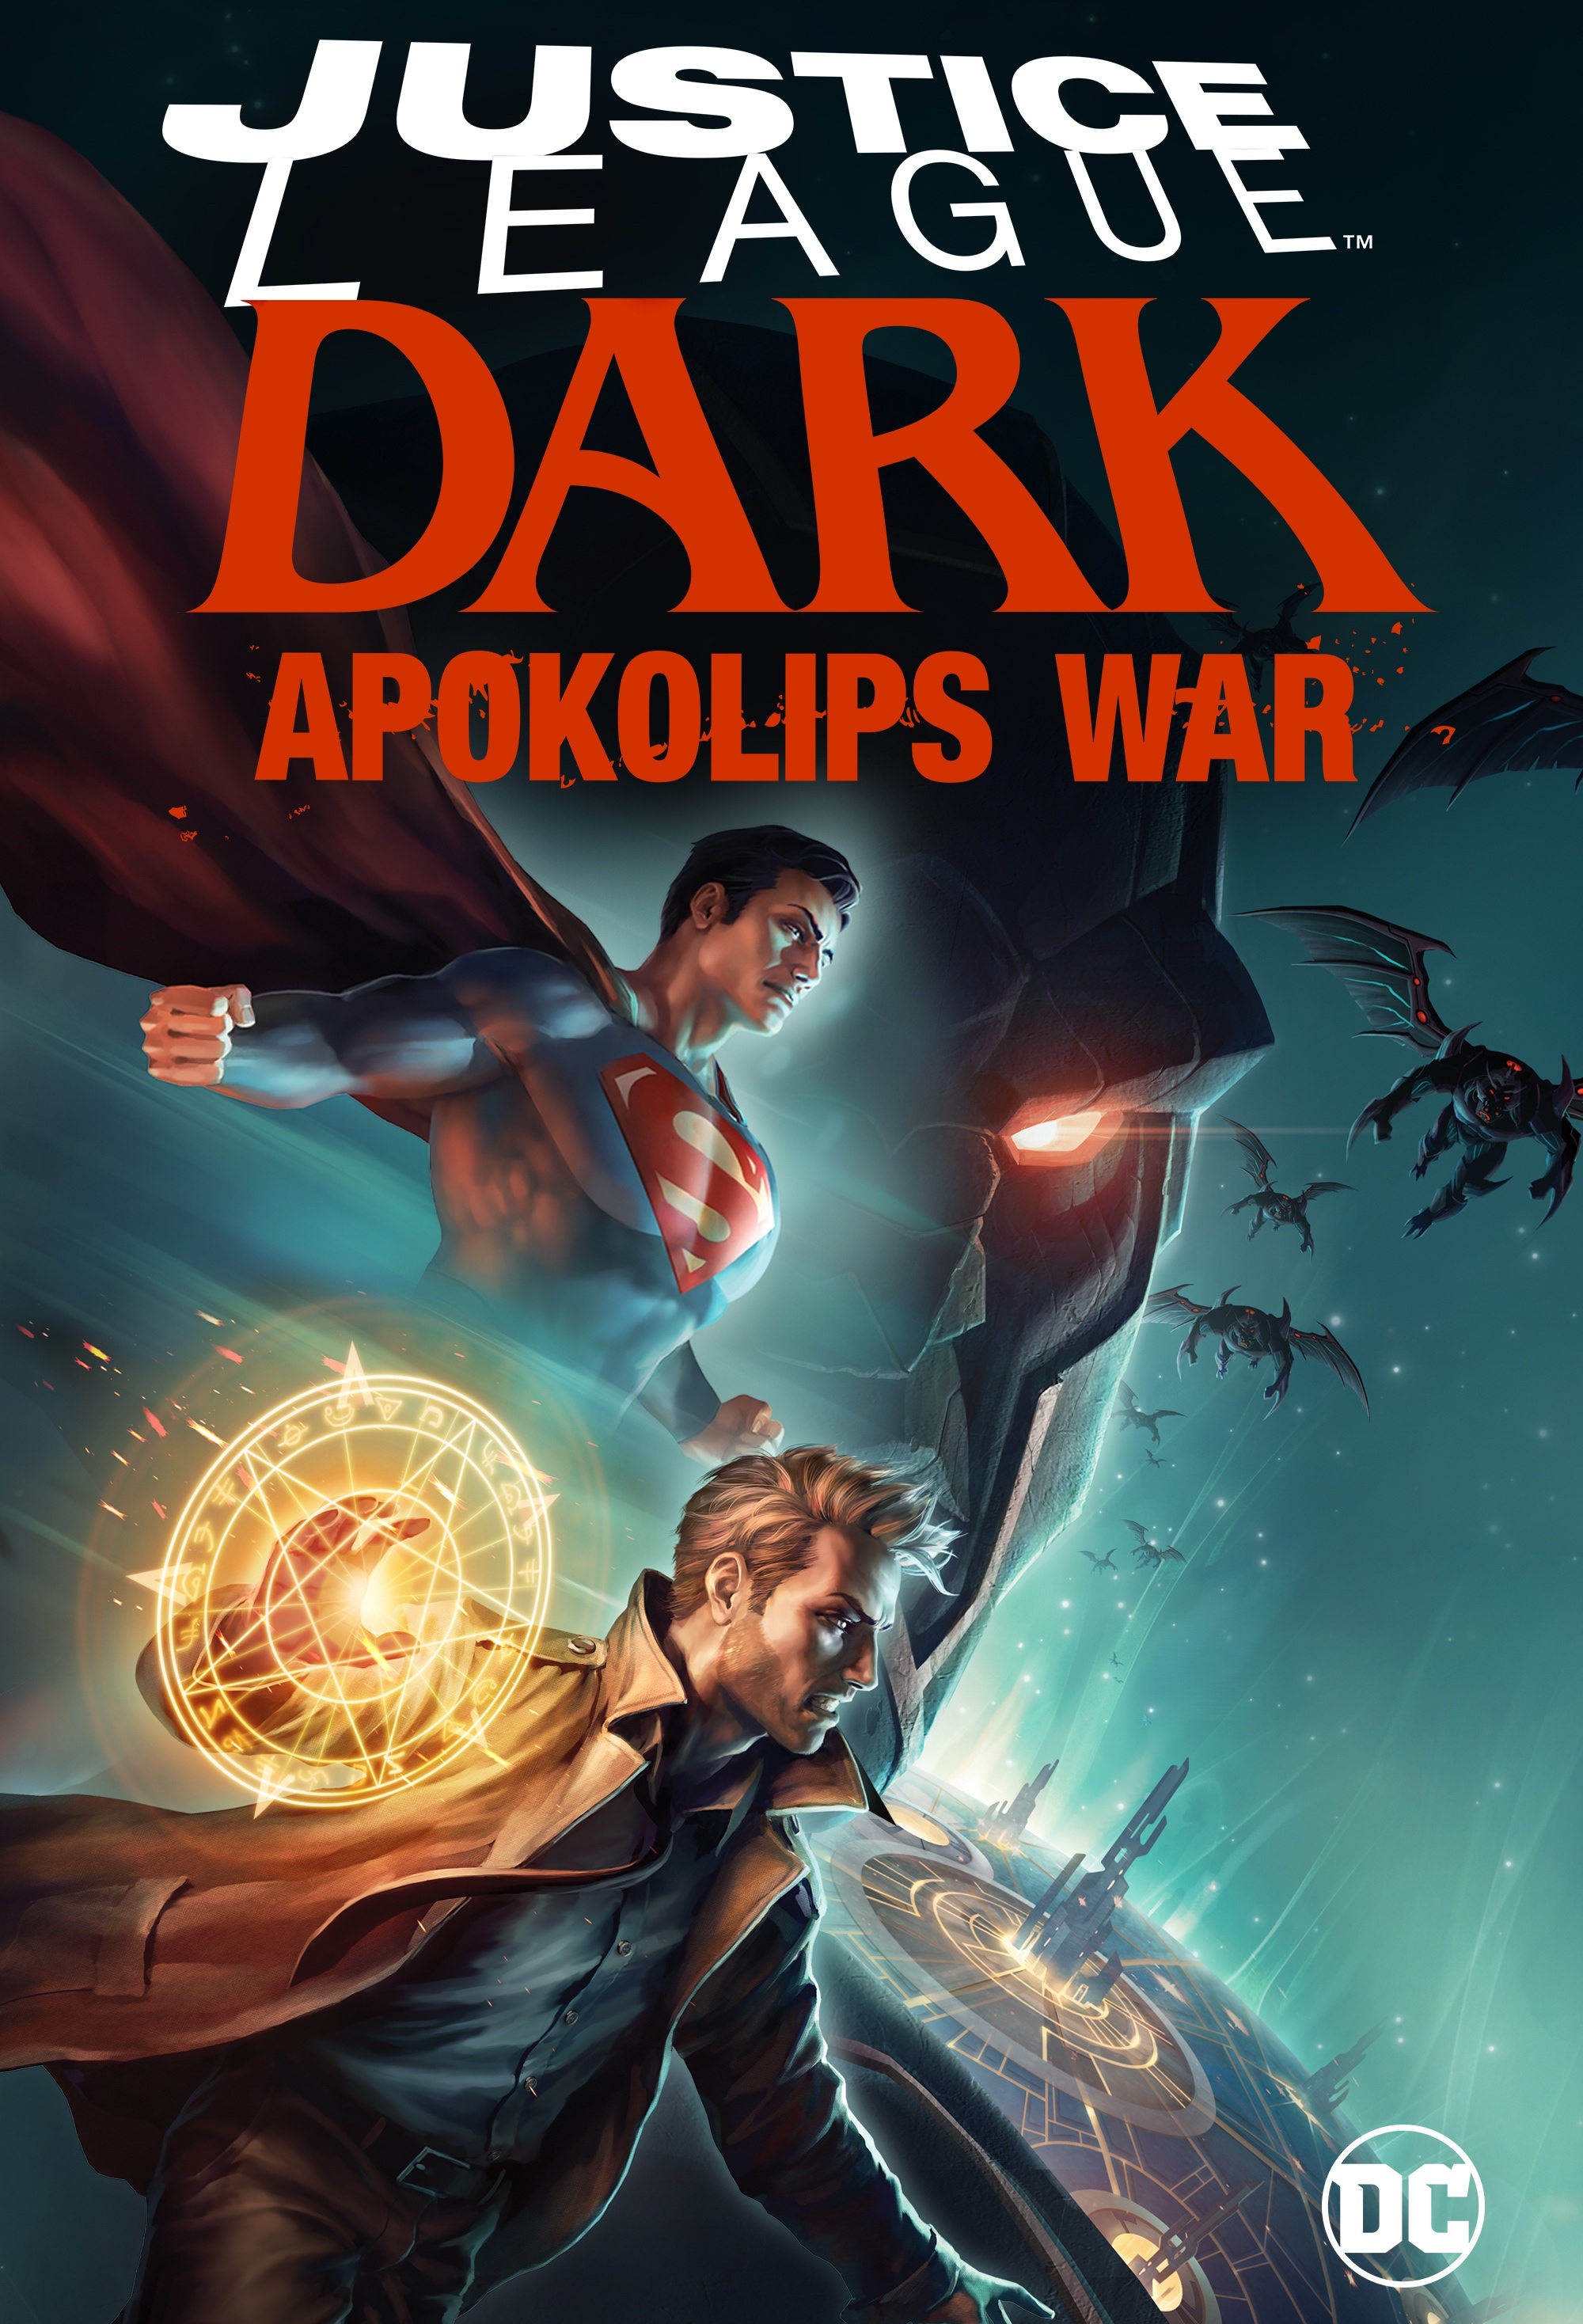 Justice League Dark Apokolips War Video Photo Gallery